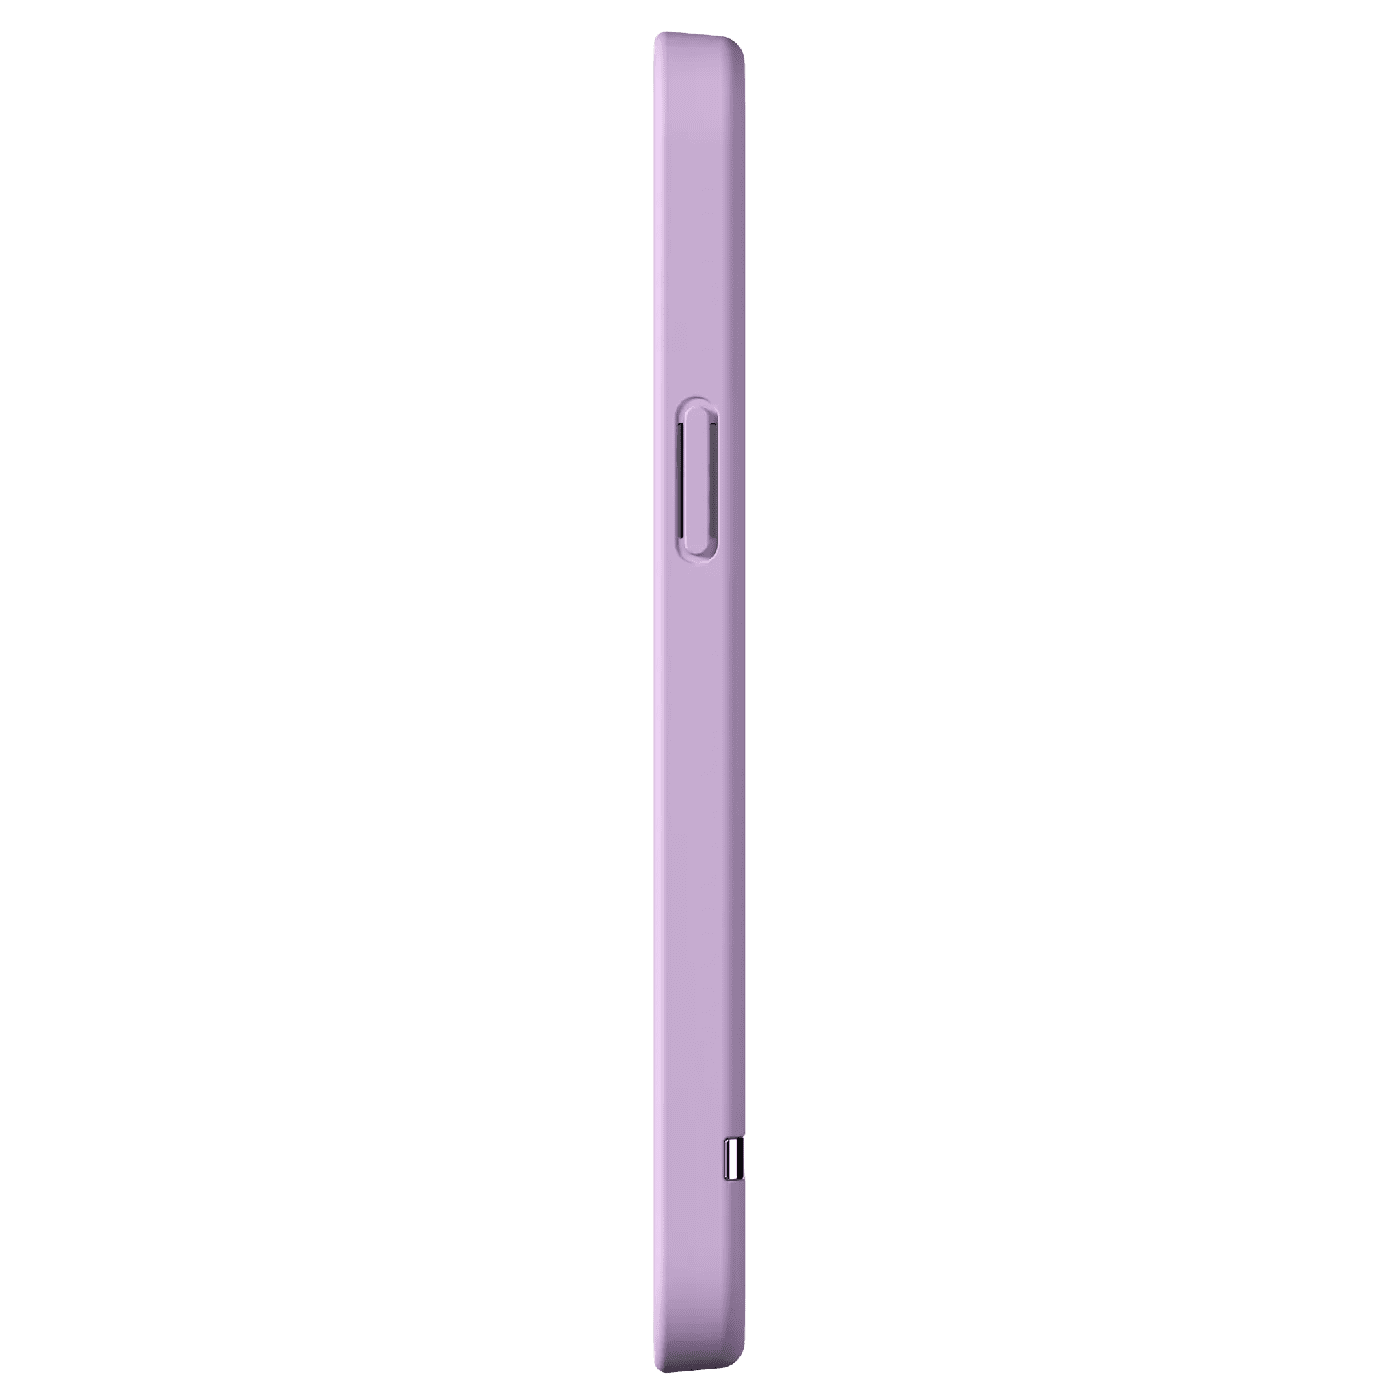 Фото — Чехол для смартфона Richmond & Finch для iPhone 12 Pro Max (6.7) SS21, фиолетовый